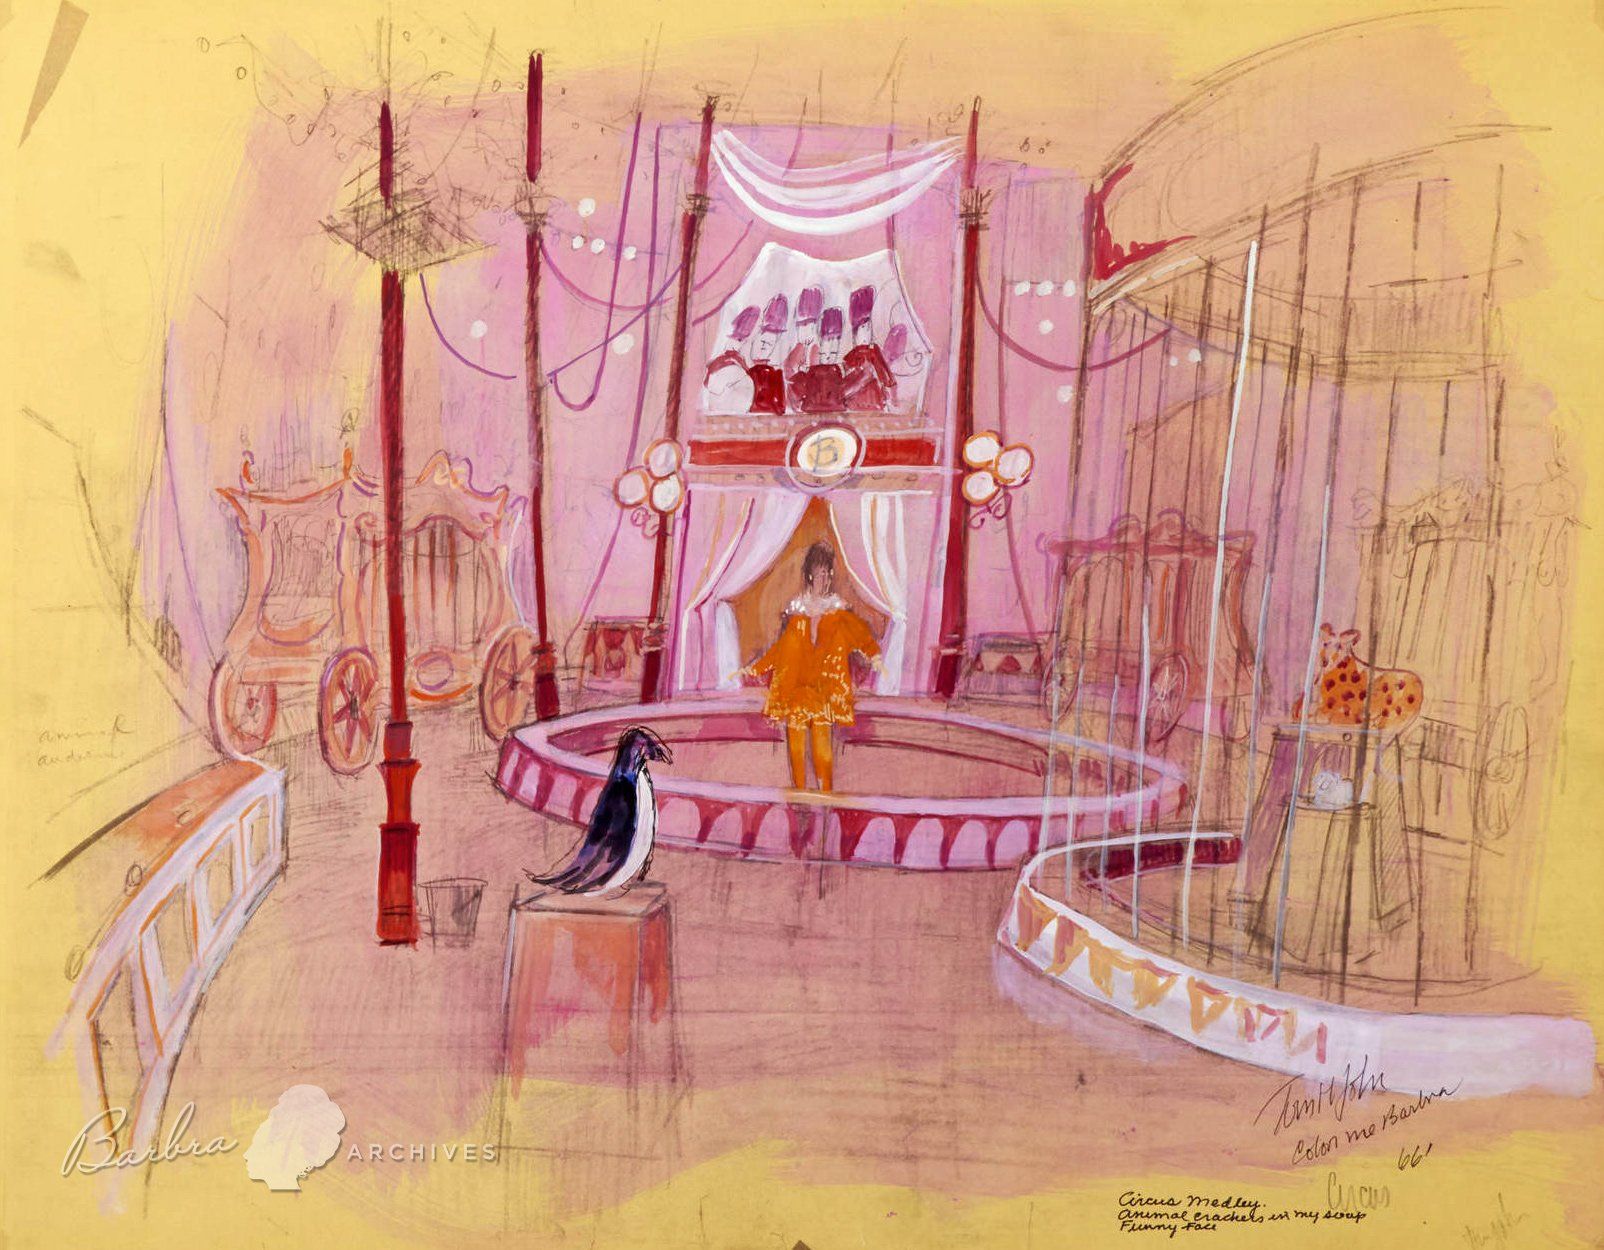 Tom John's drawing of the circus set.